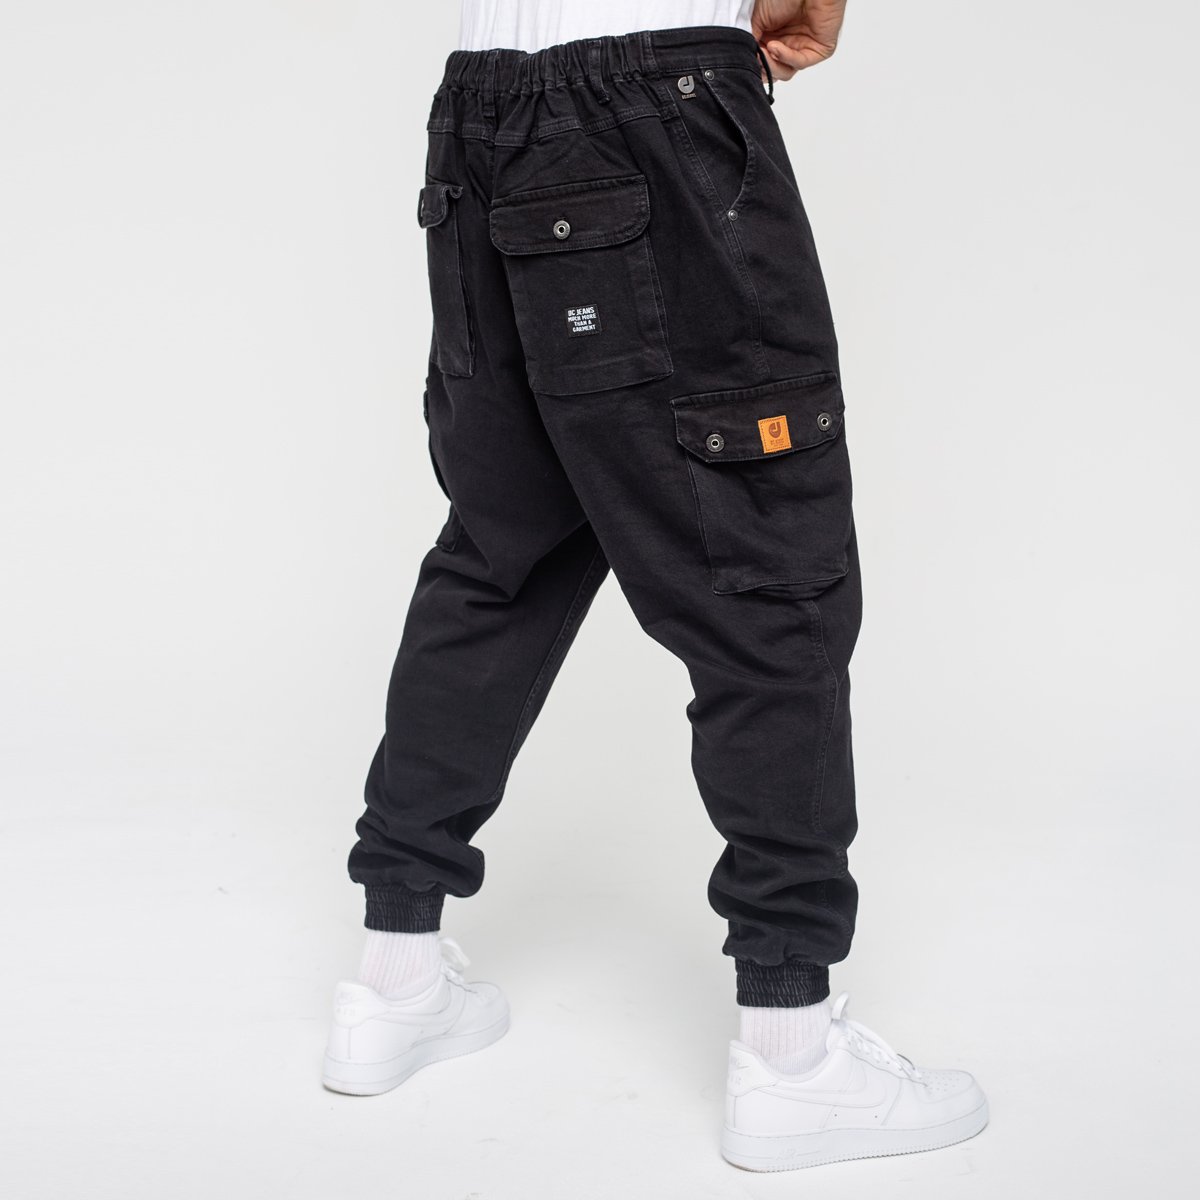 Pantalon cargo homme - Noir avec Poches Latérales Sarouel